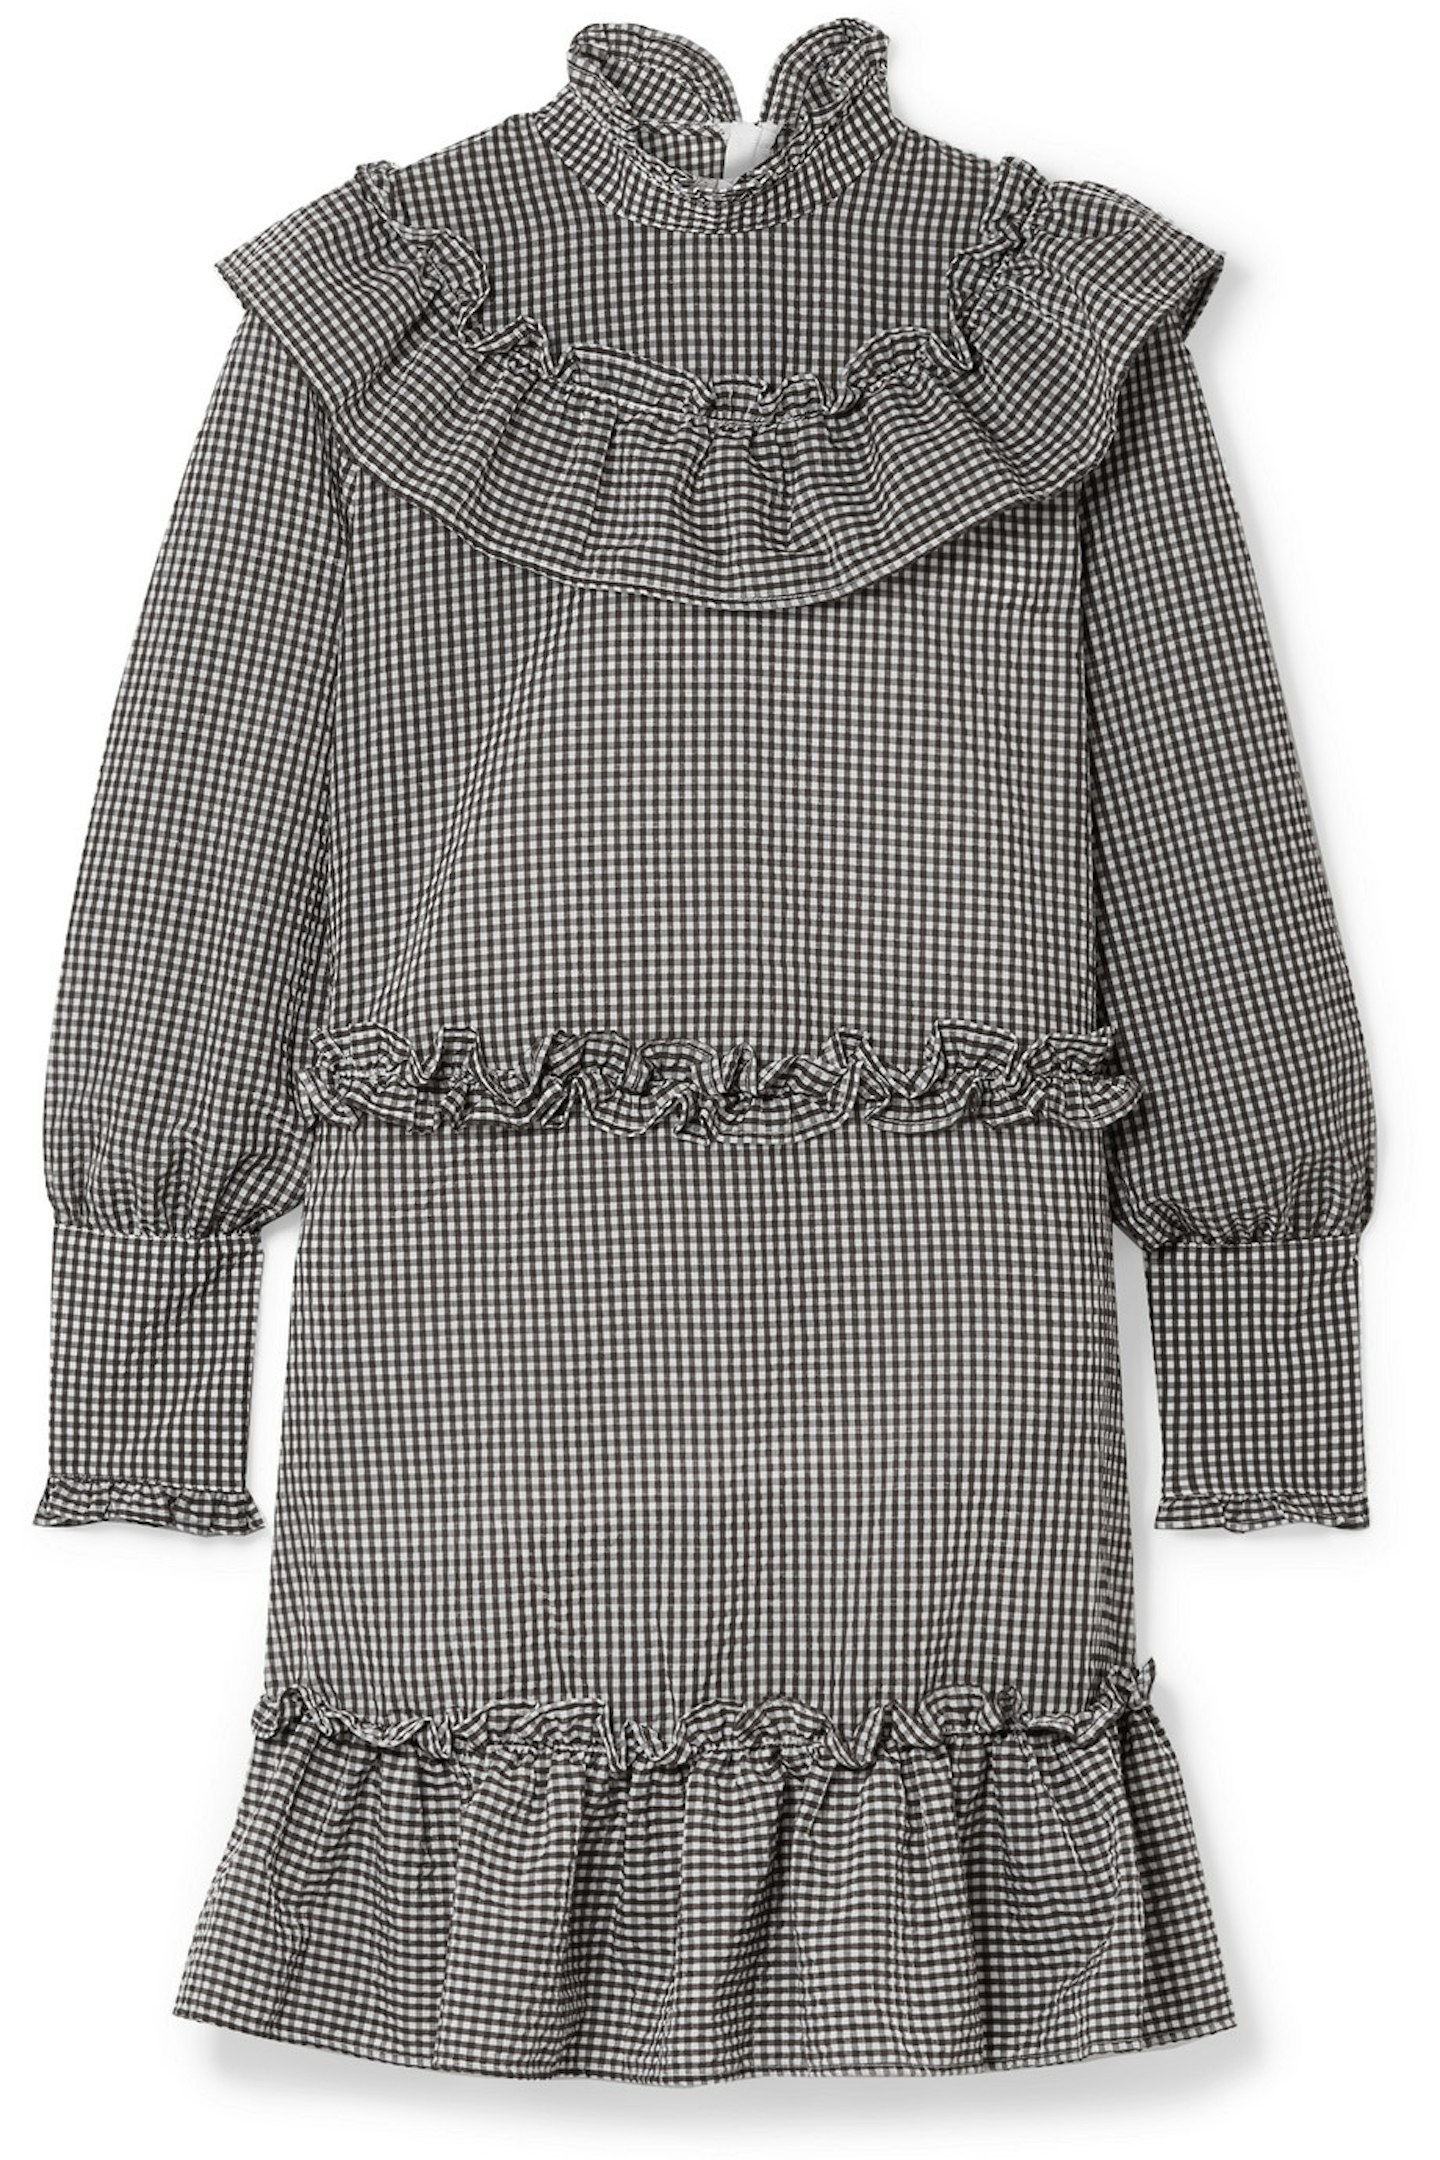 Ganni, Charron Ruffle-Trimmed Mini Dress, £160, Net-A-Porter